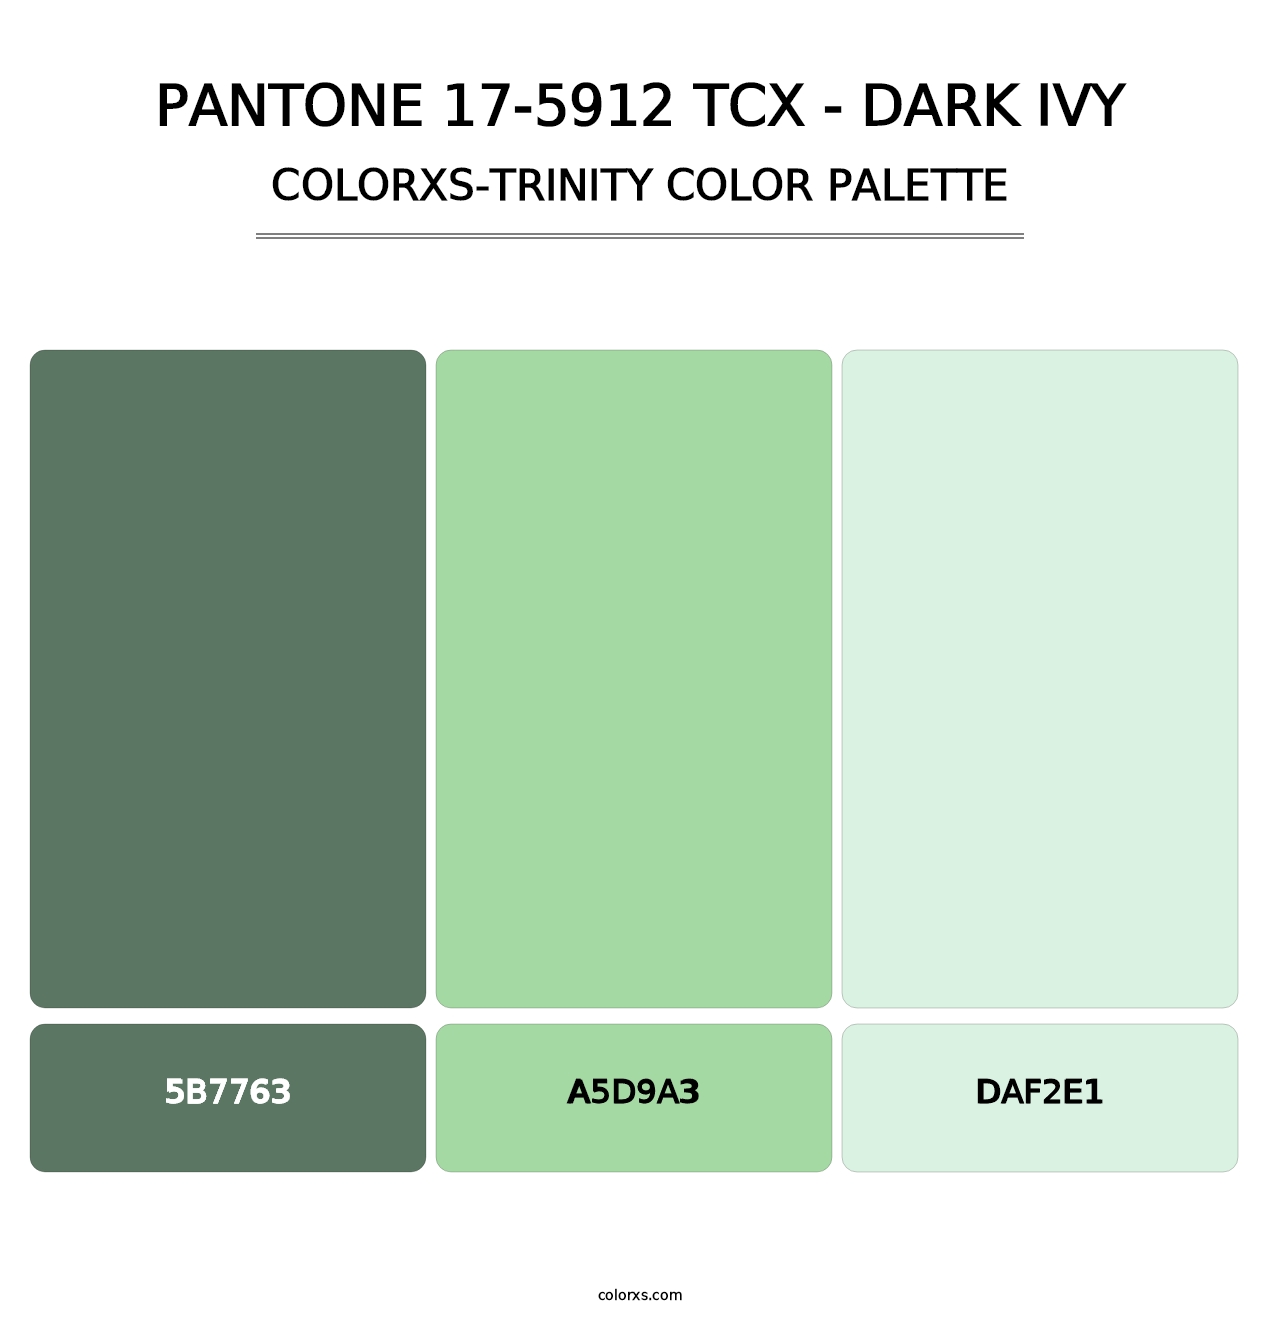 PANTONE 17-5912 TCX - Dark Ivy - Colorxs Trinity Palette